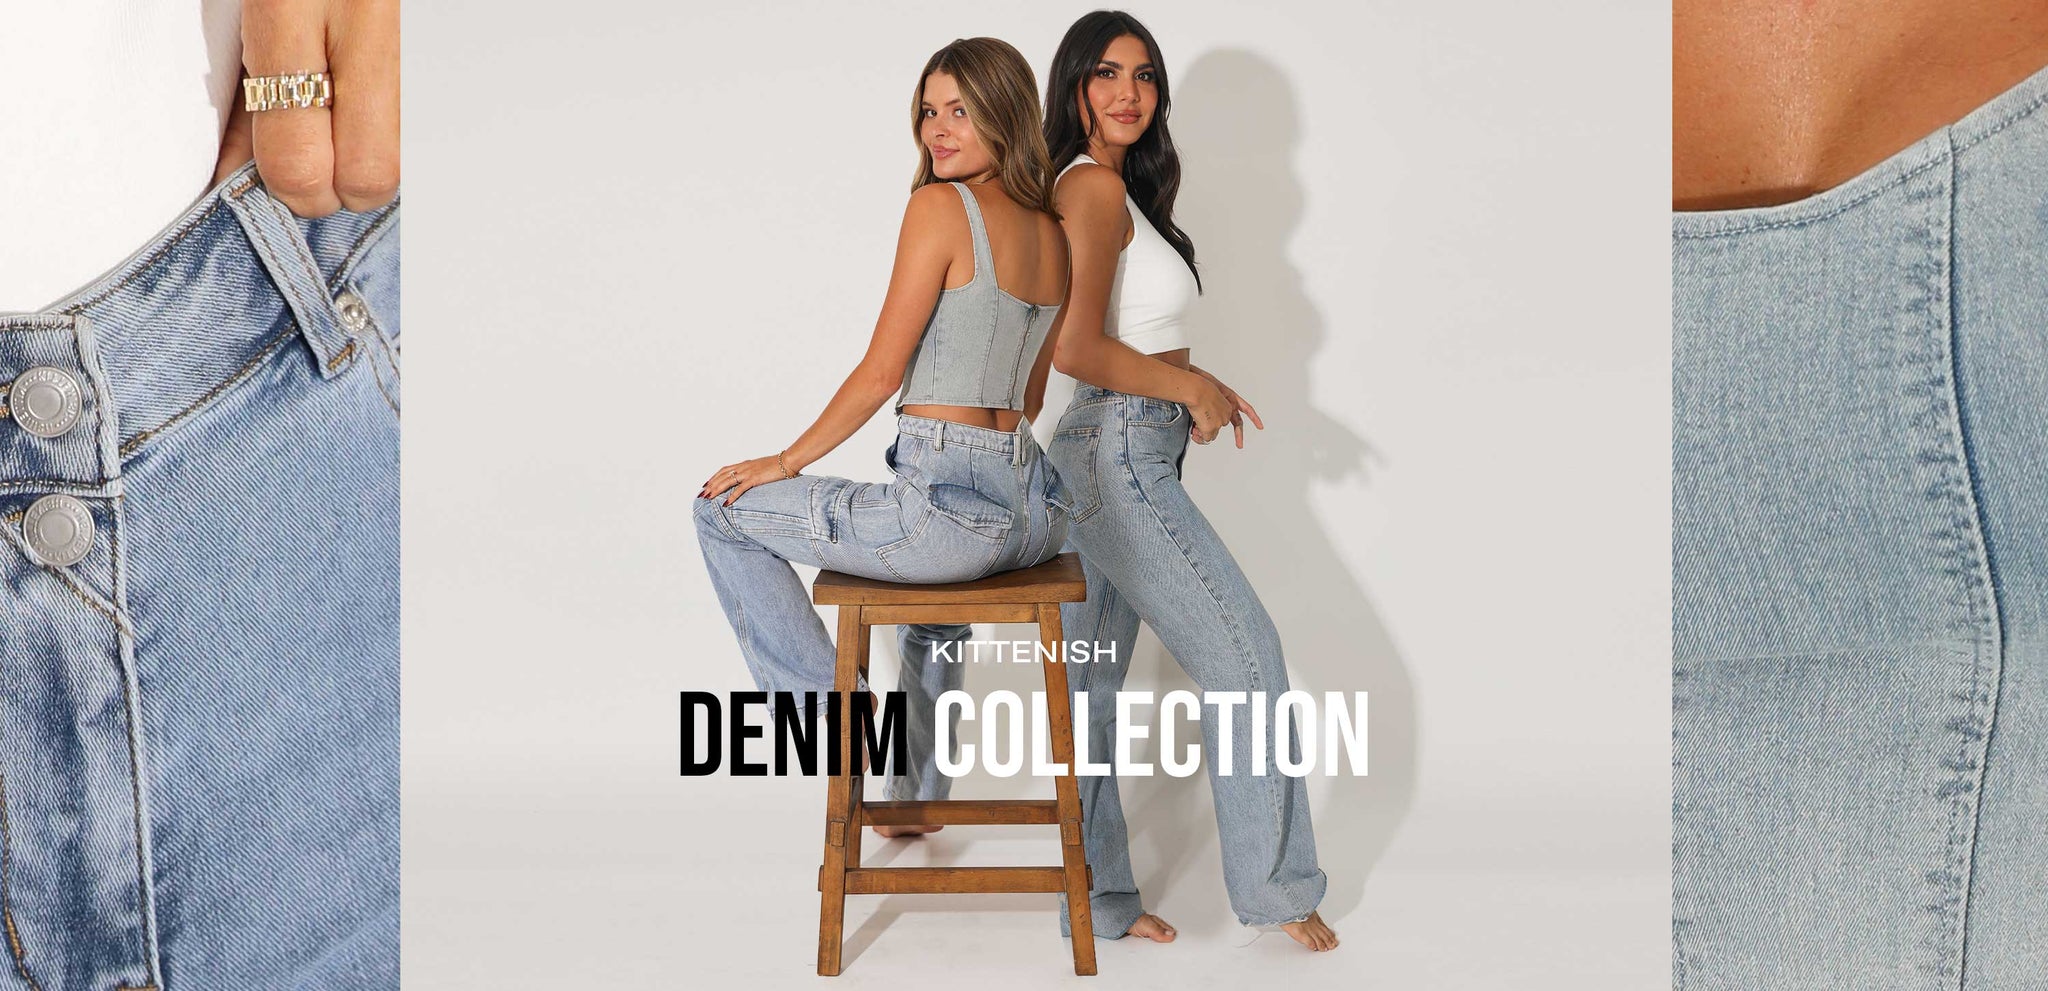 Kittenish: Denim Collection